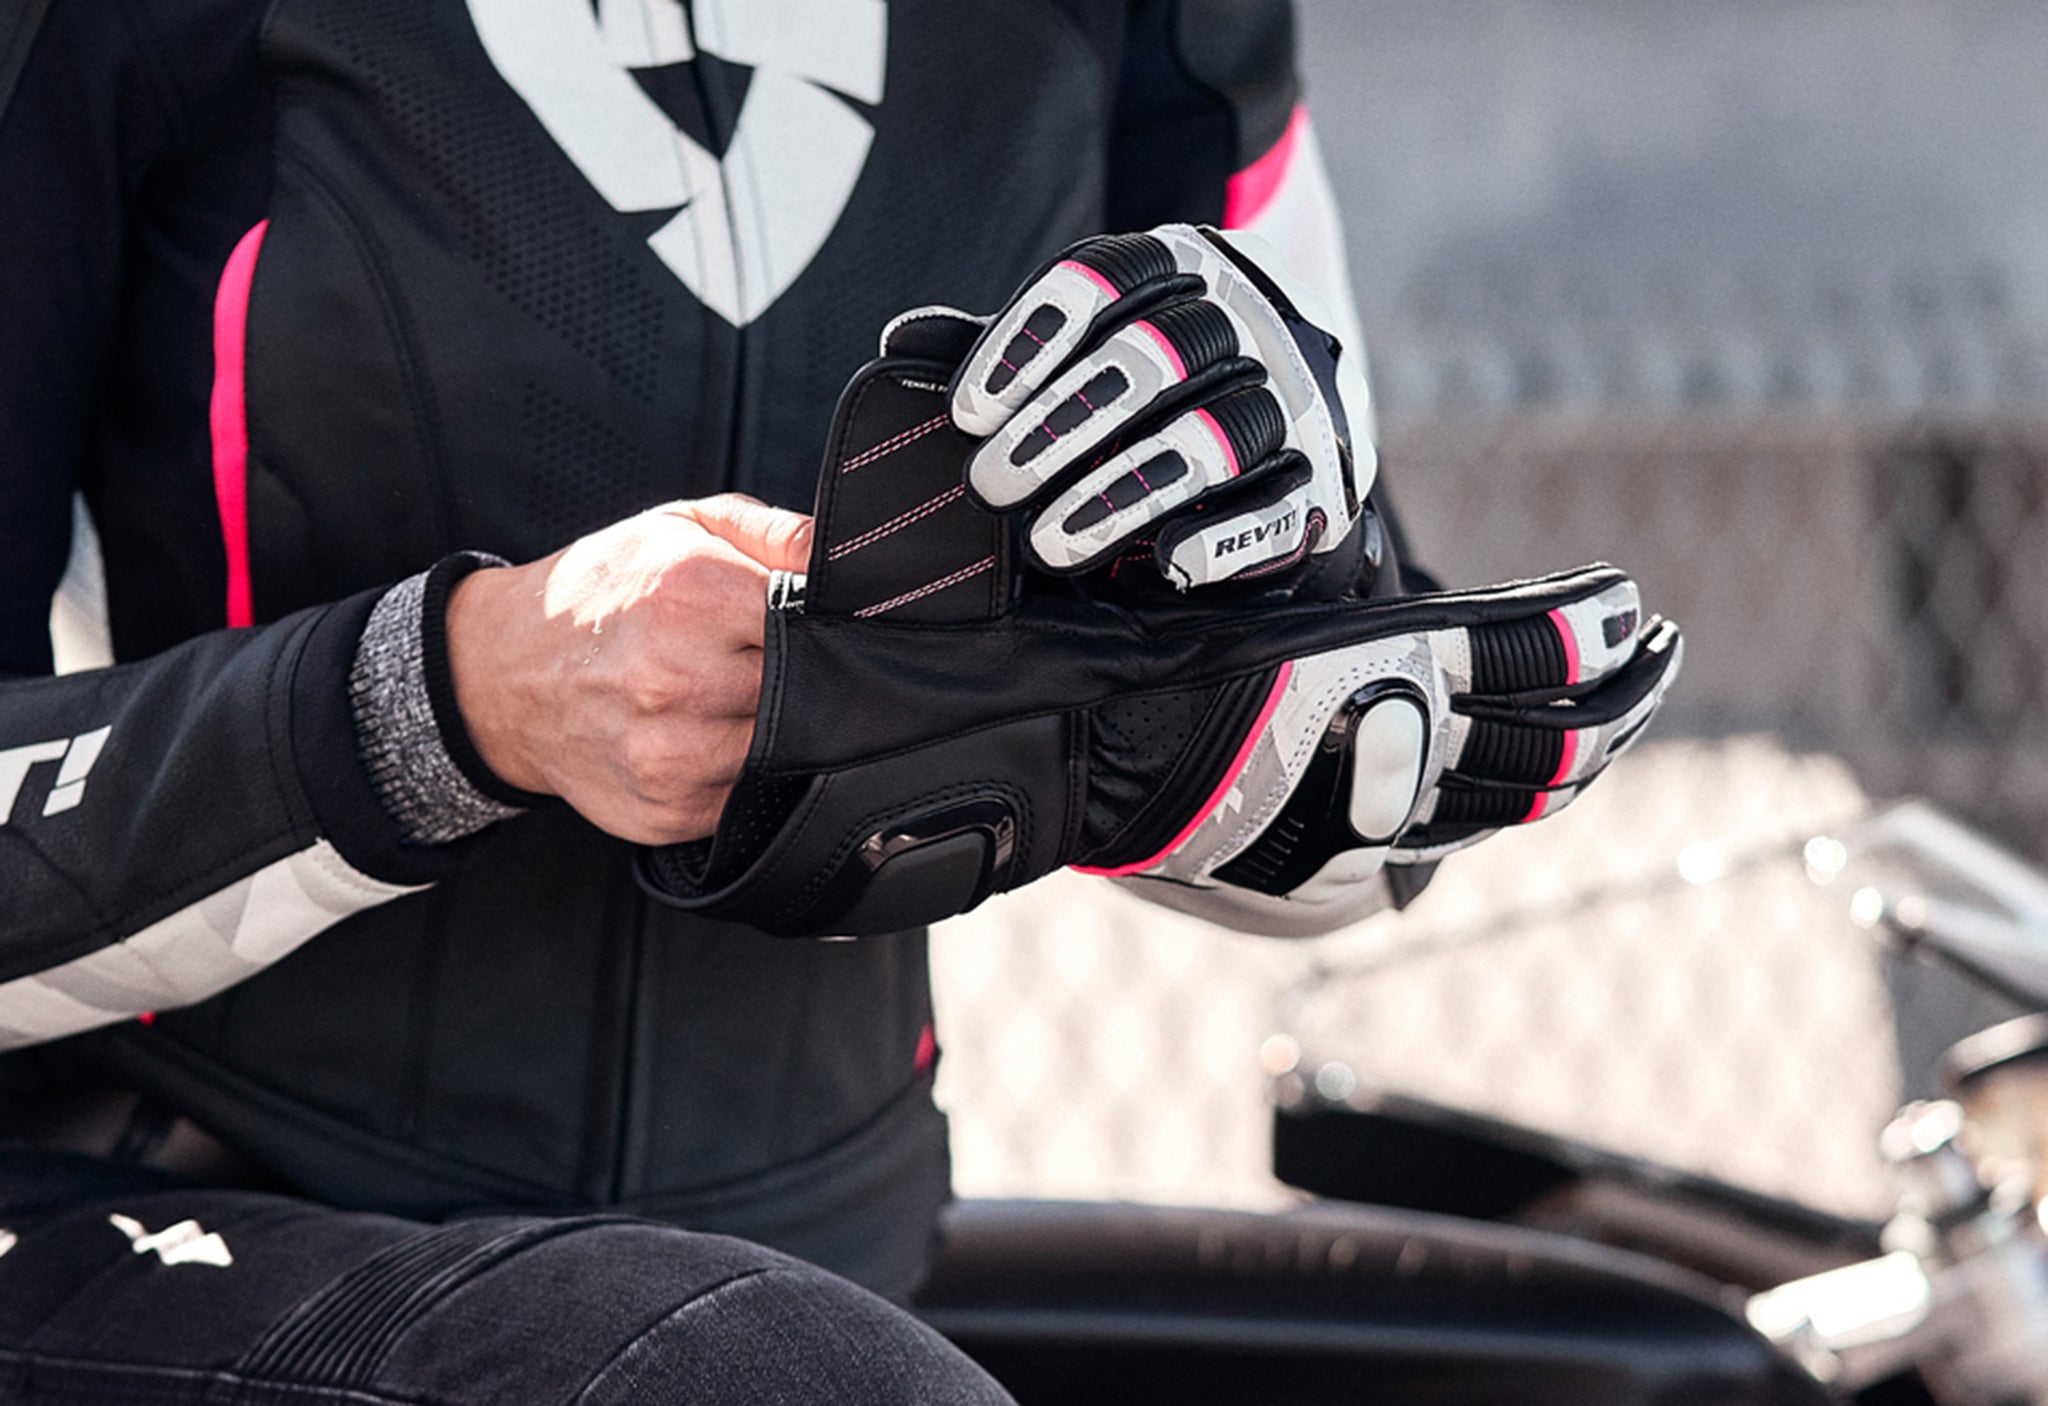 REV'IT! Womens Motorcycle Gloves